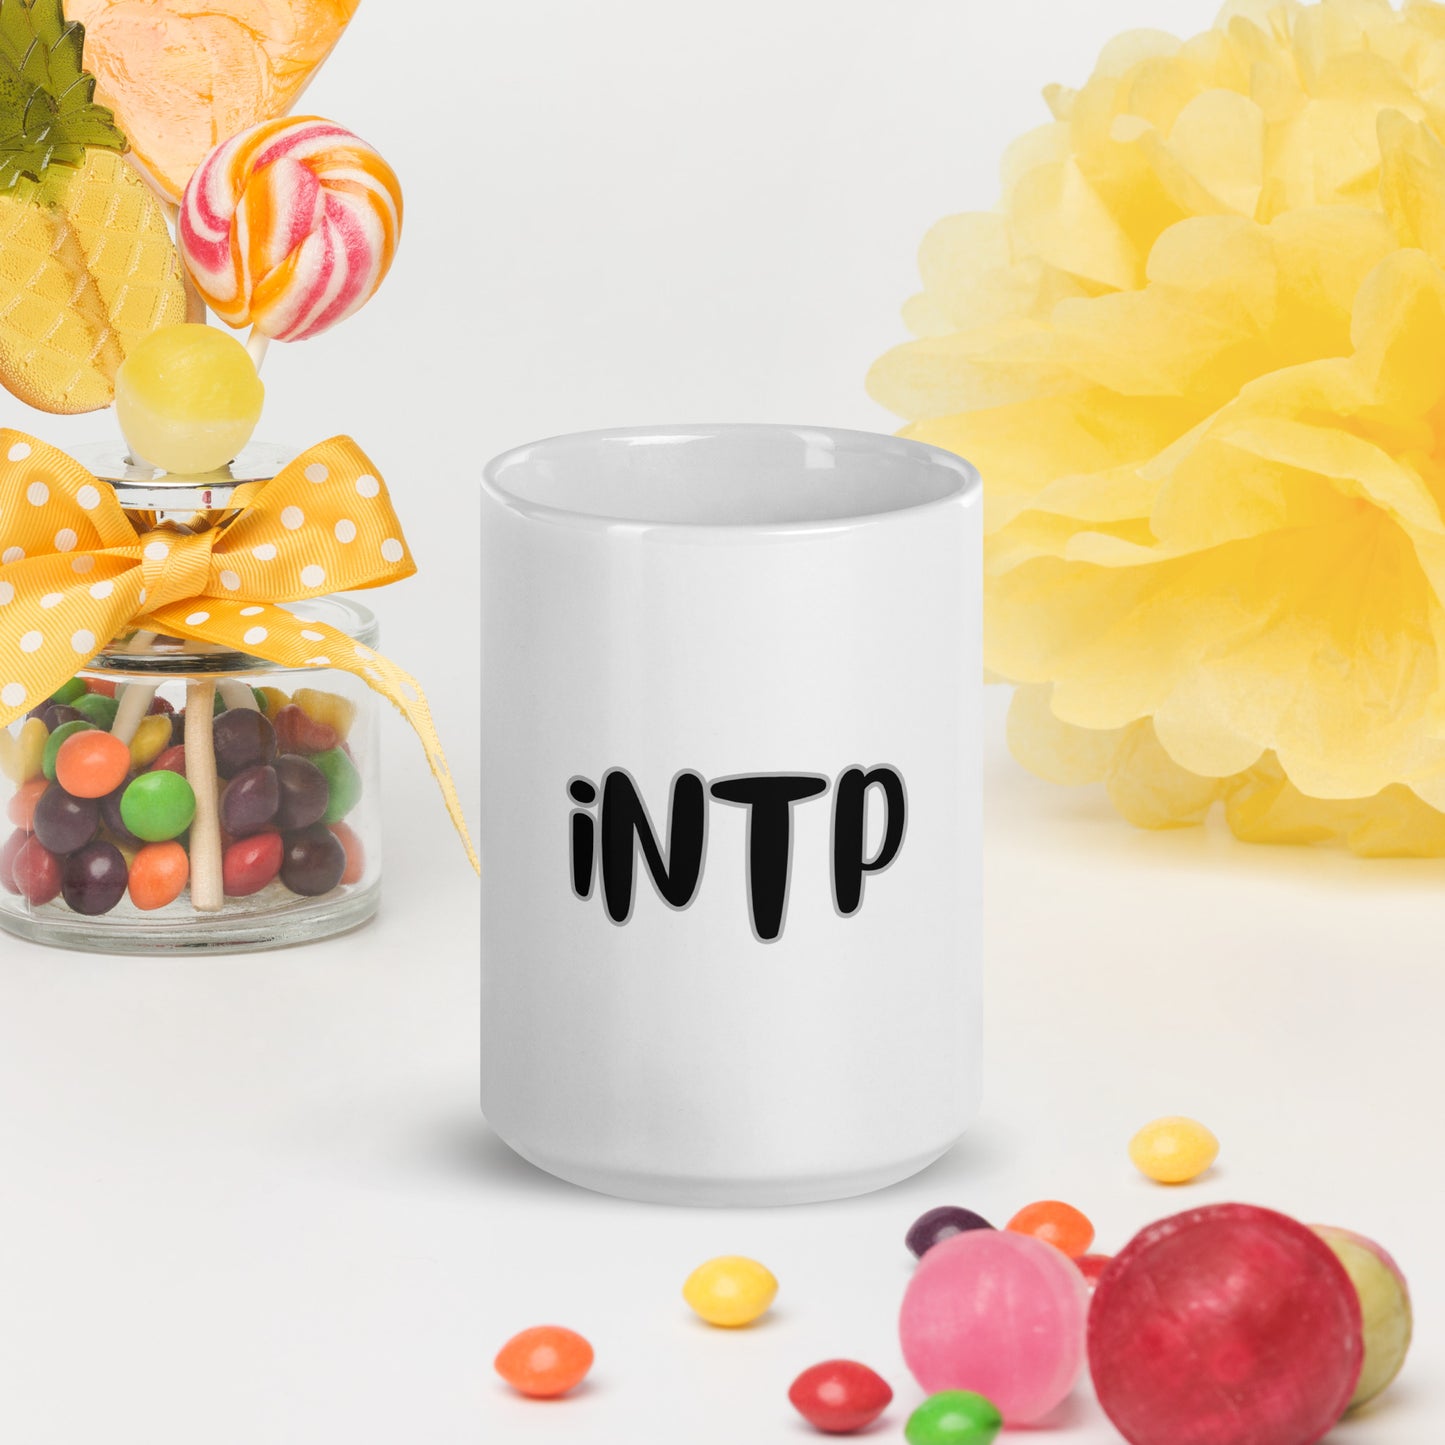 INTP White glossy mug